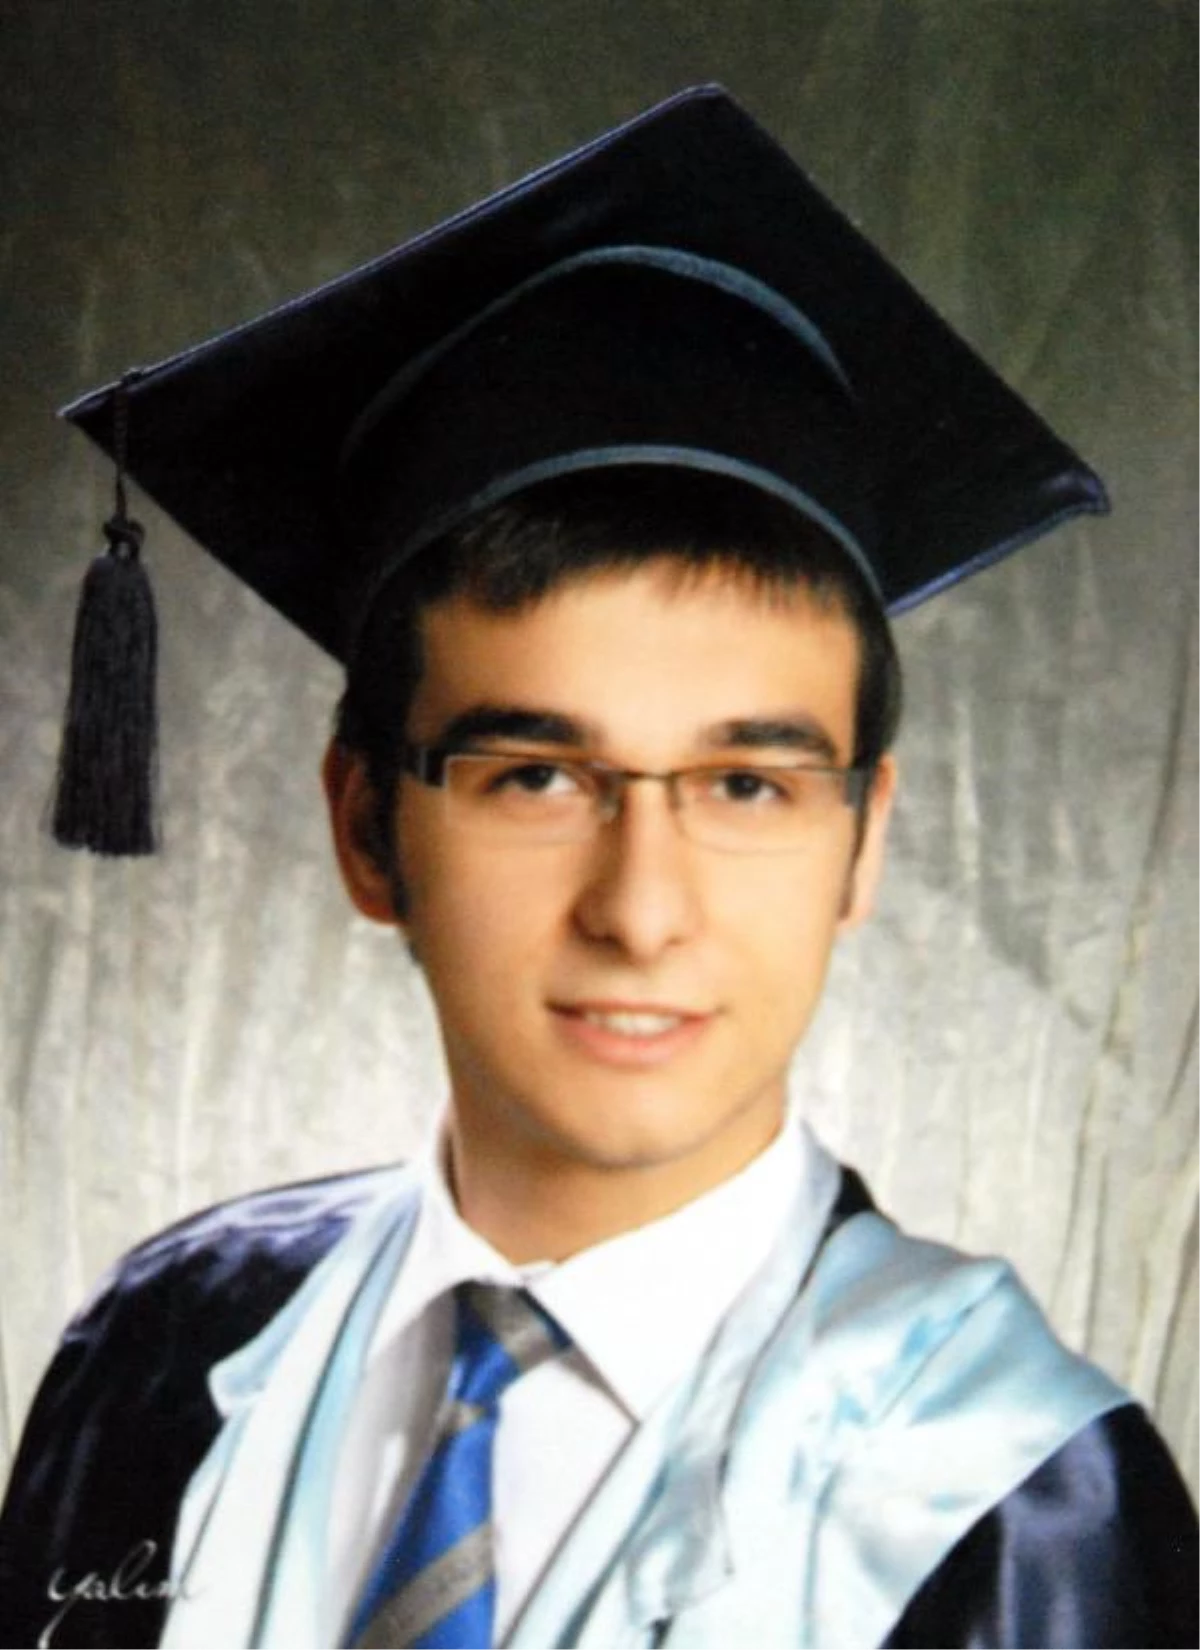 Tinercinin Bıçakladığı Tıp Öğrencisi 7,5 Ay Sonra Öldü